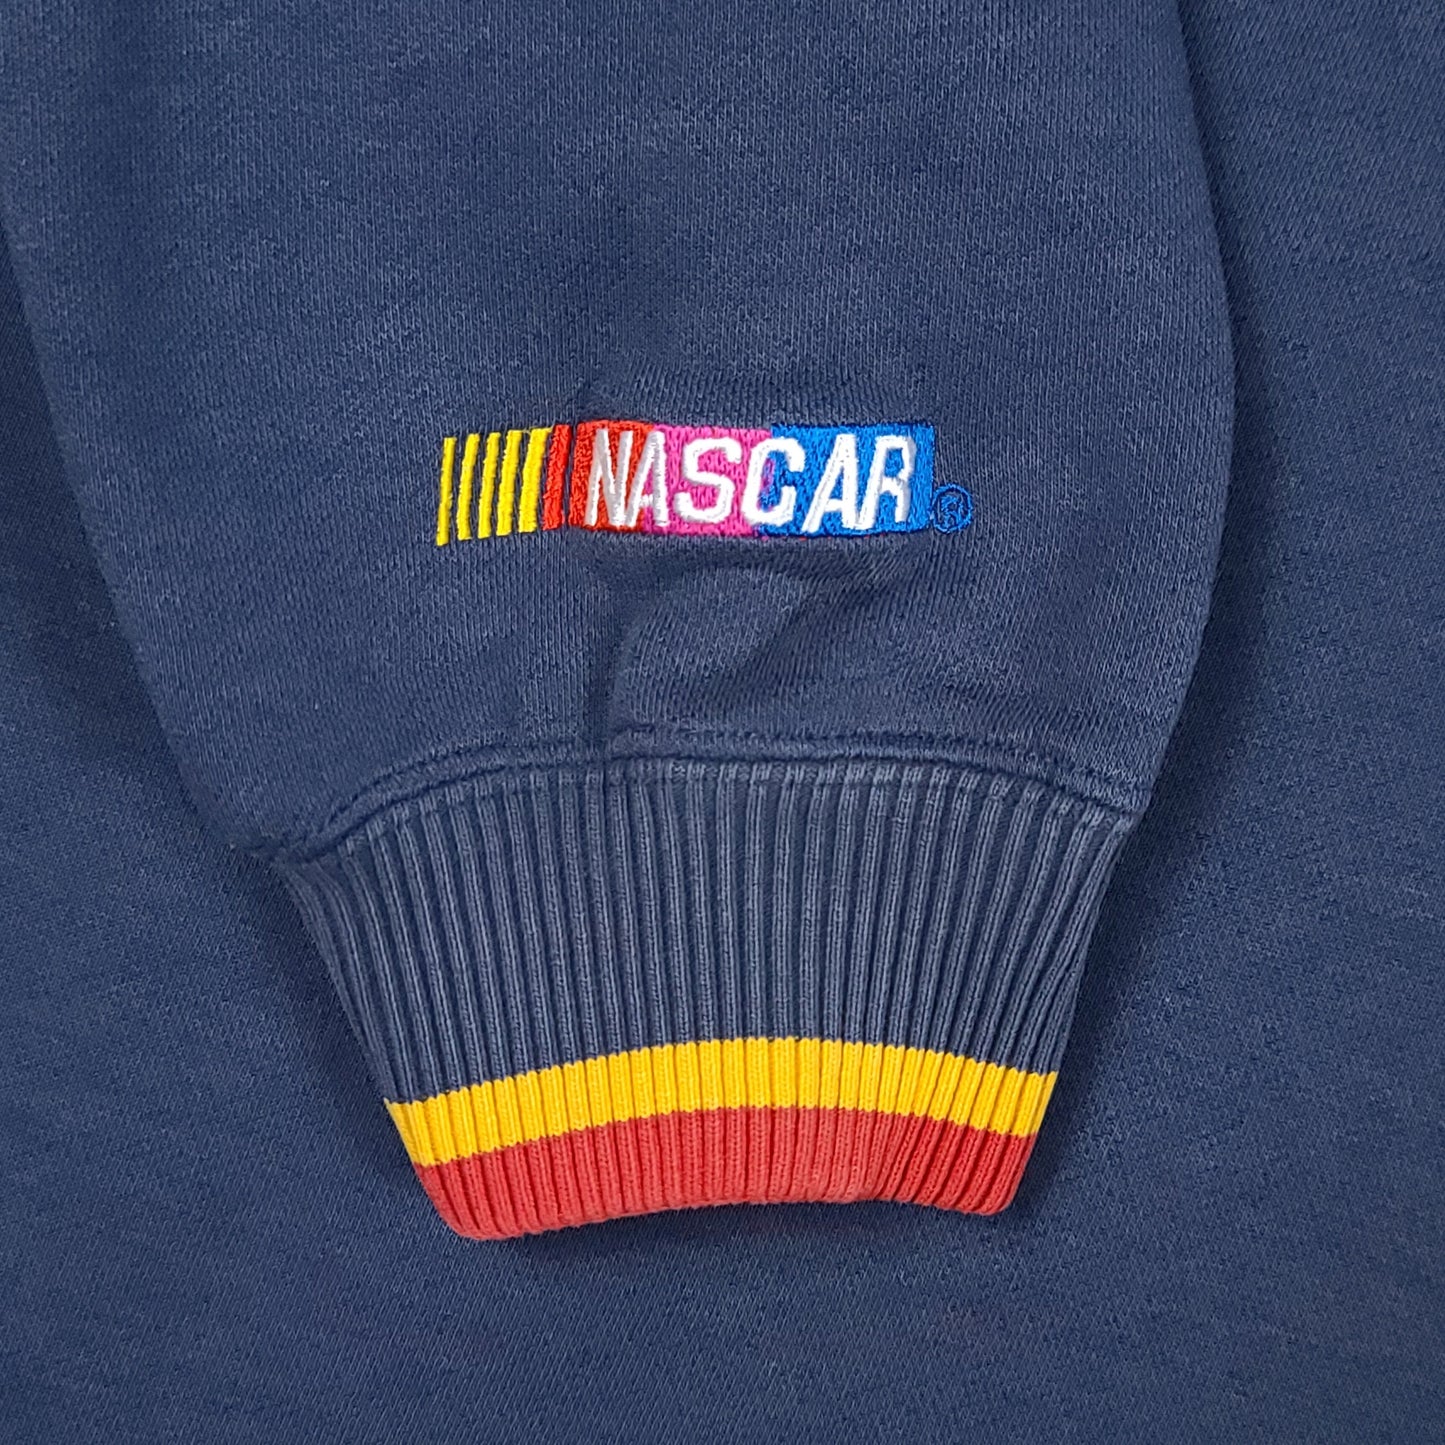 Vintage Jeff Gordon #24 Blue Nascar Racing Sweatshirt